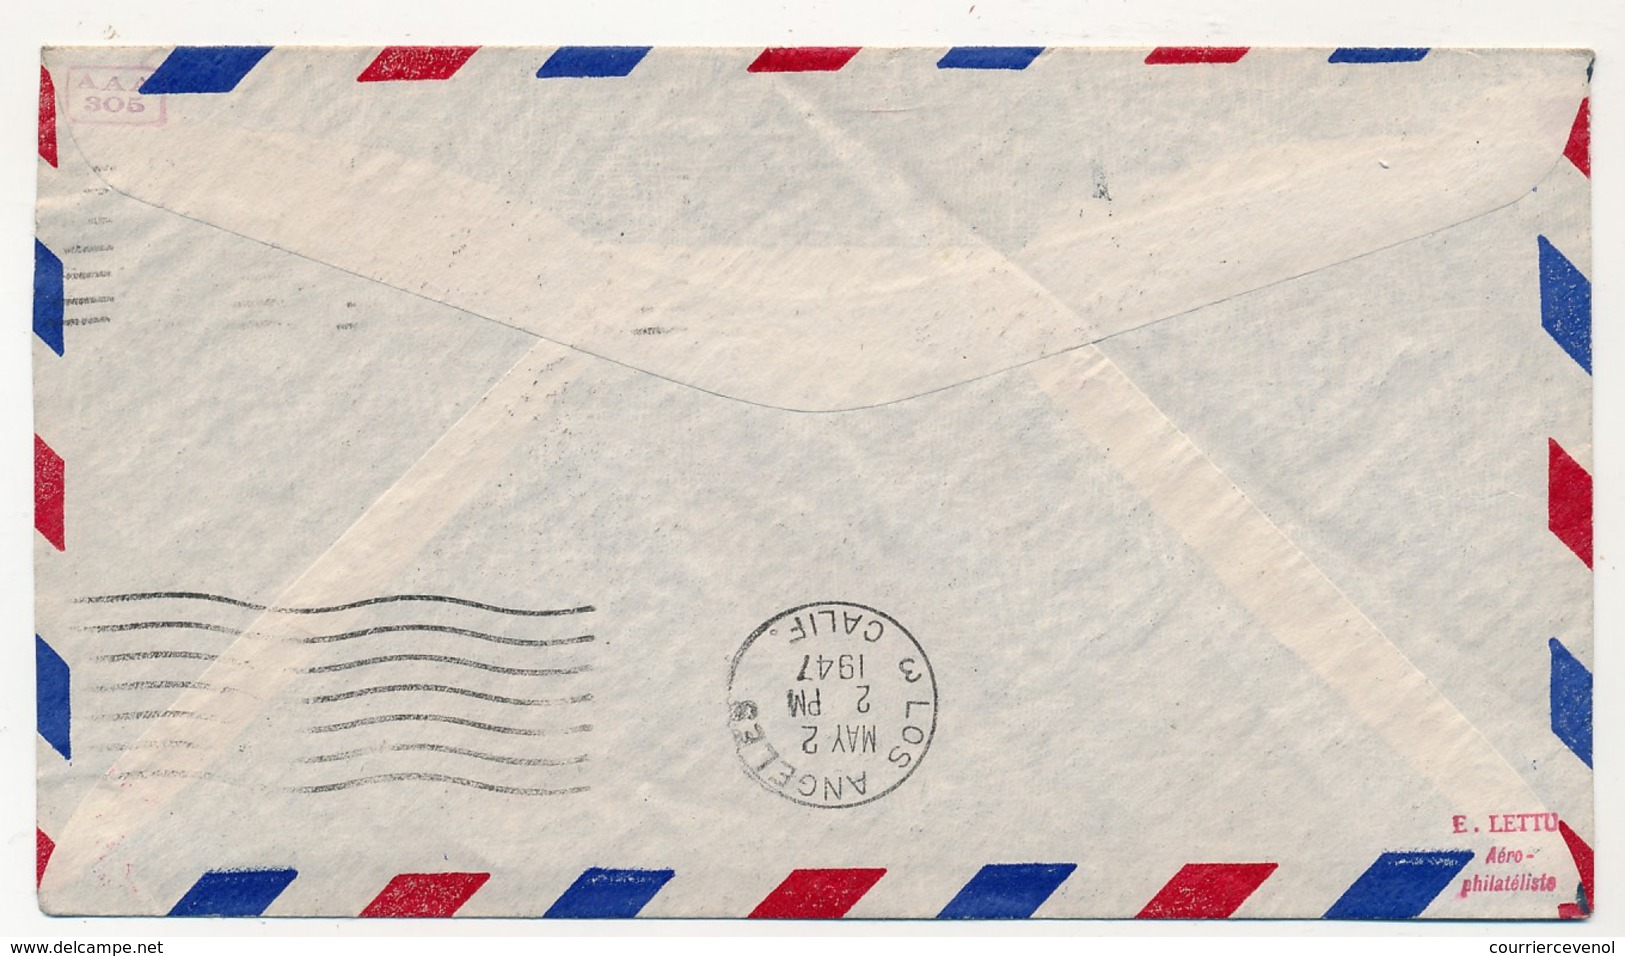 Etats Unis - Premier Vol YUMA Arizona - Western Air Lines - 2 Mai 1947 - 2c. 1941-1960 Briefe U. Dokumente